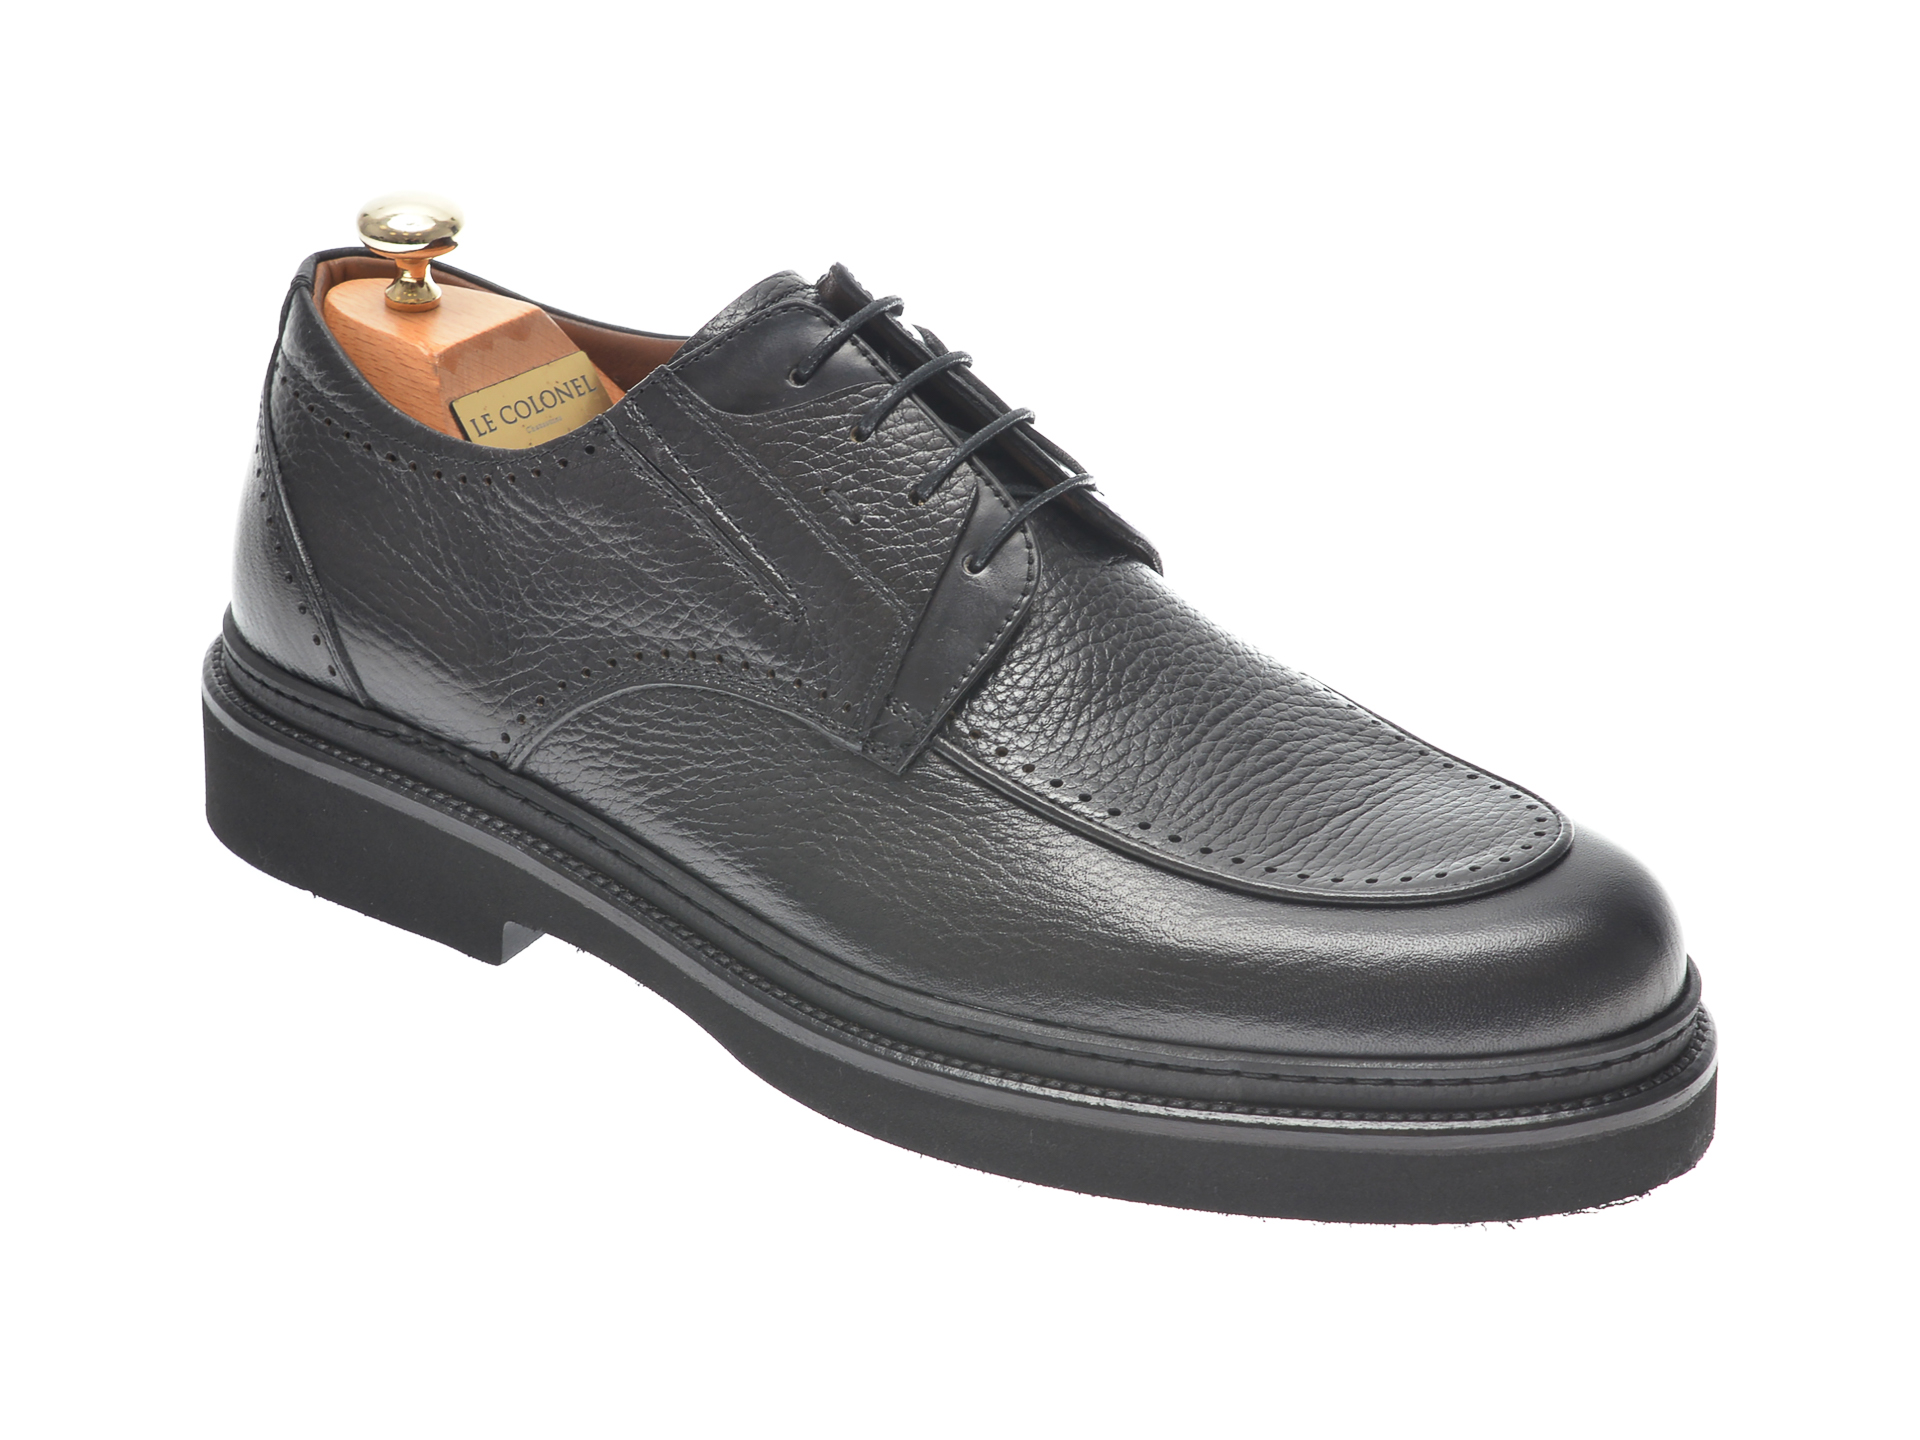 Pantofi LE COLONEL negri, 61603, din piele naturala